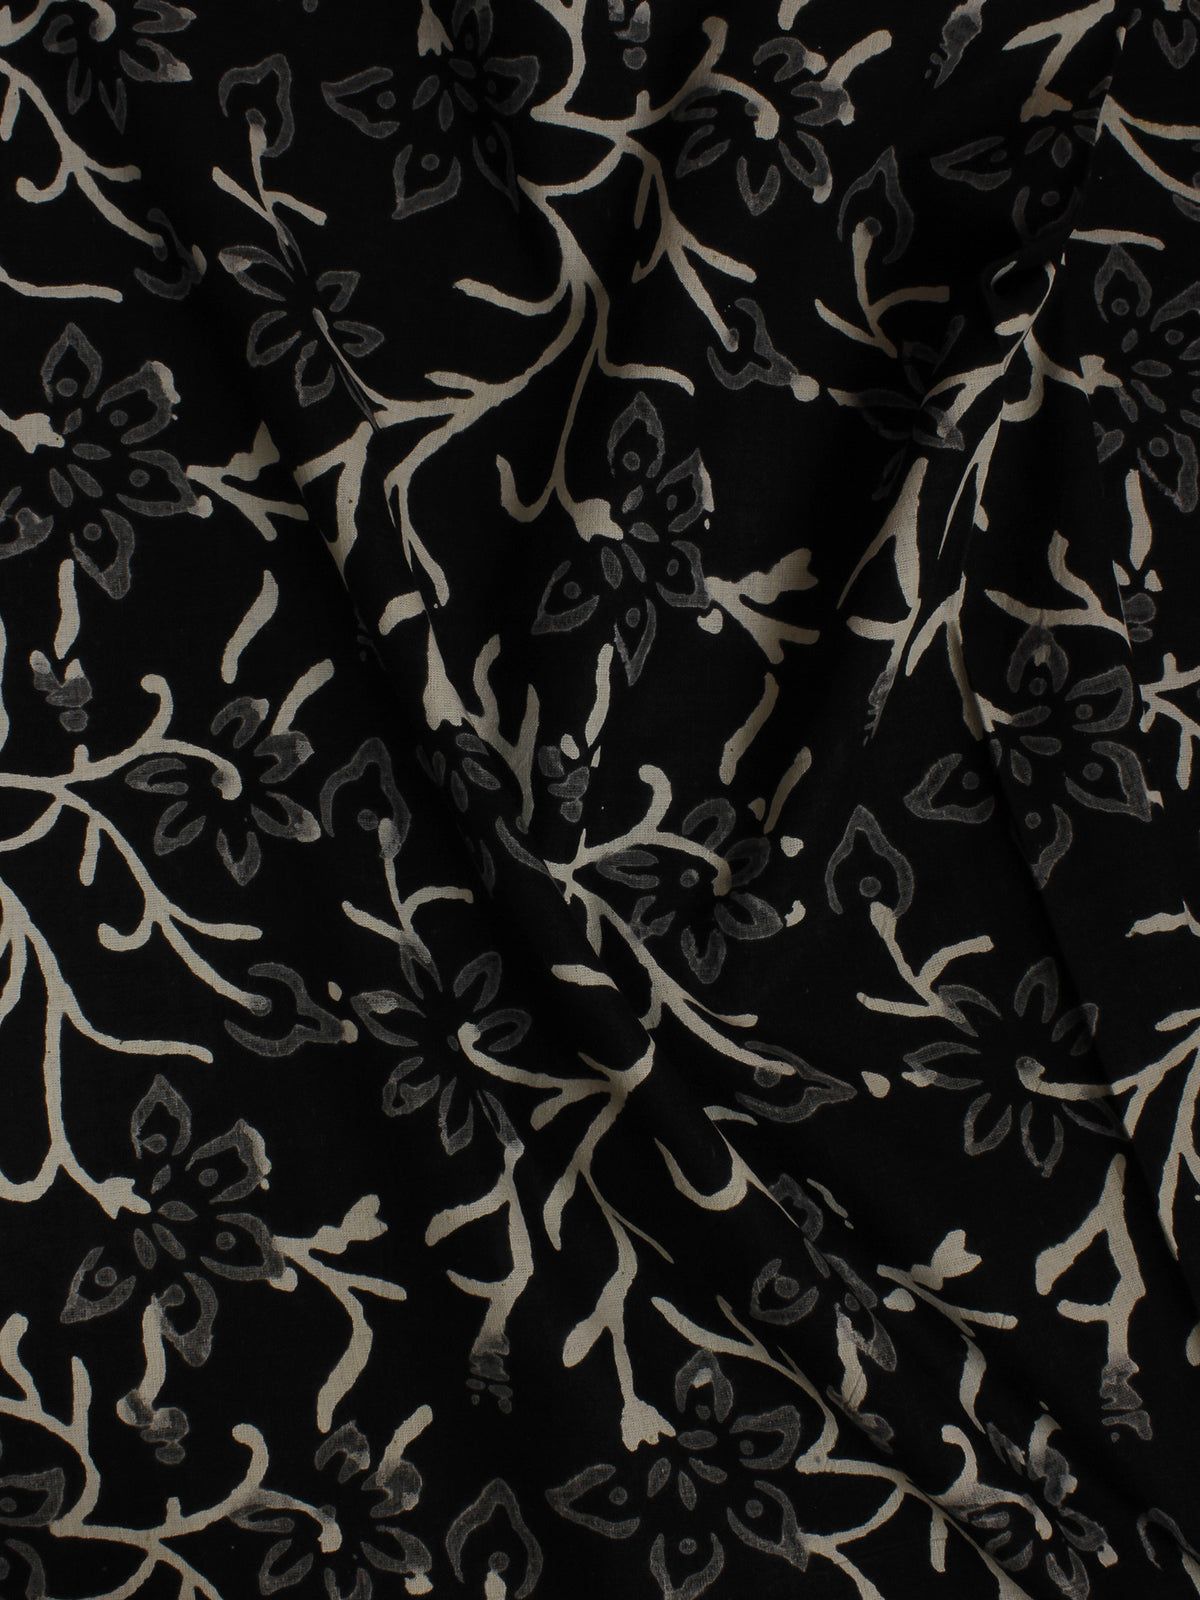 Black White Hand Block Printed Cotton  Cambric Fabric Per Meter - F0916059